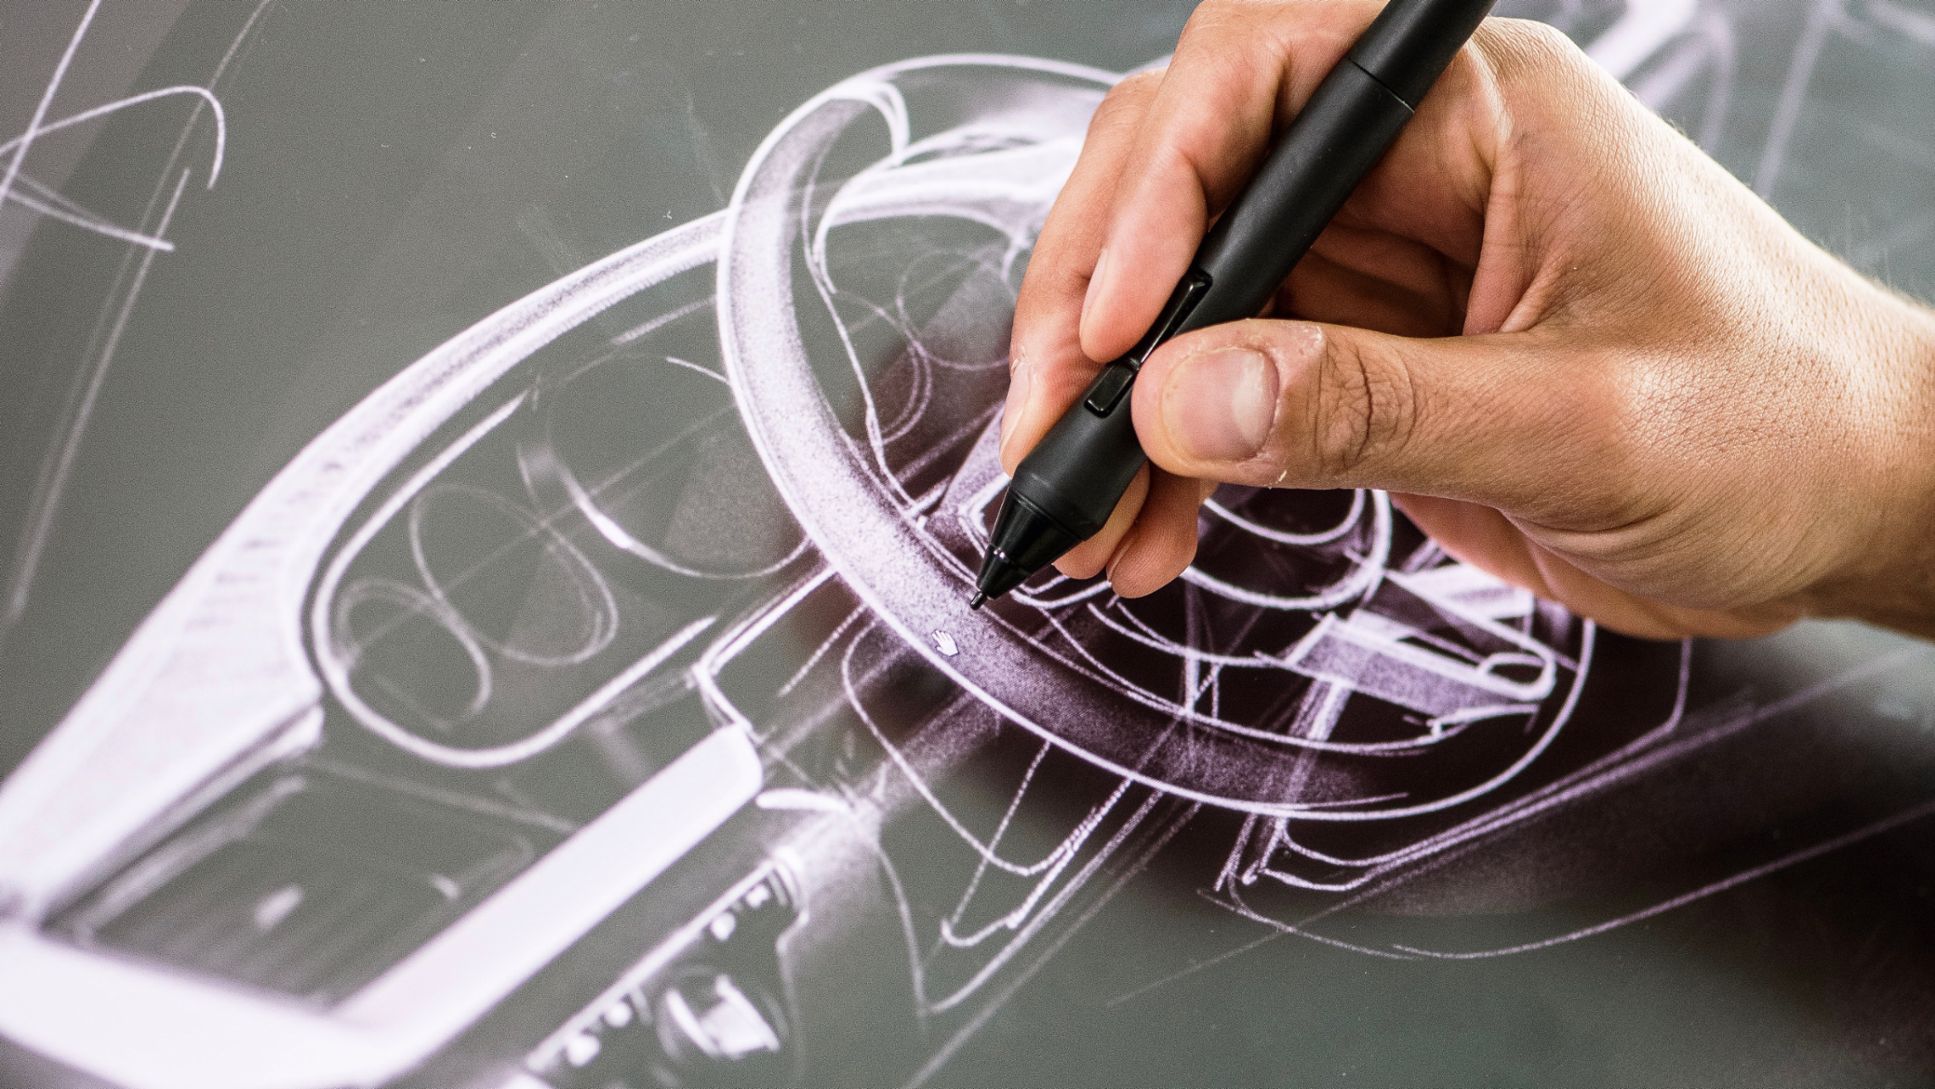 Porsche Designprozess, 2020, Porsche AG